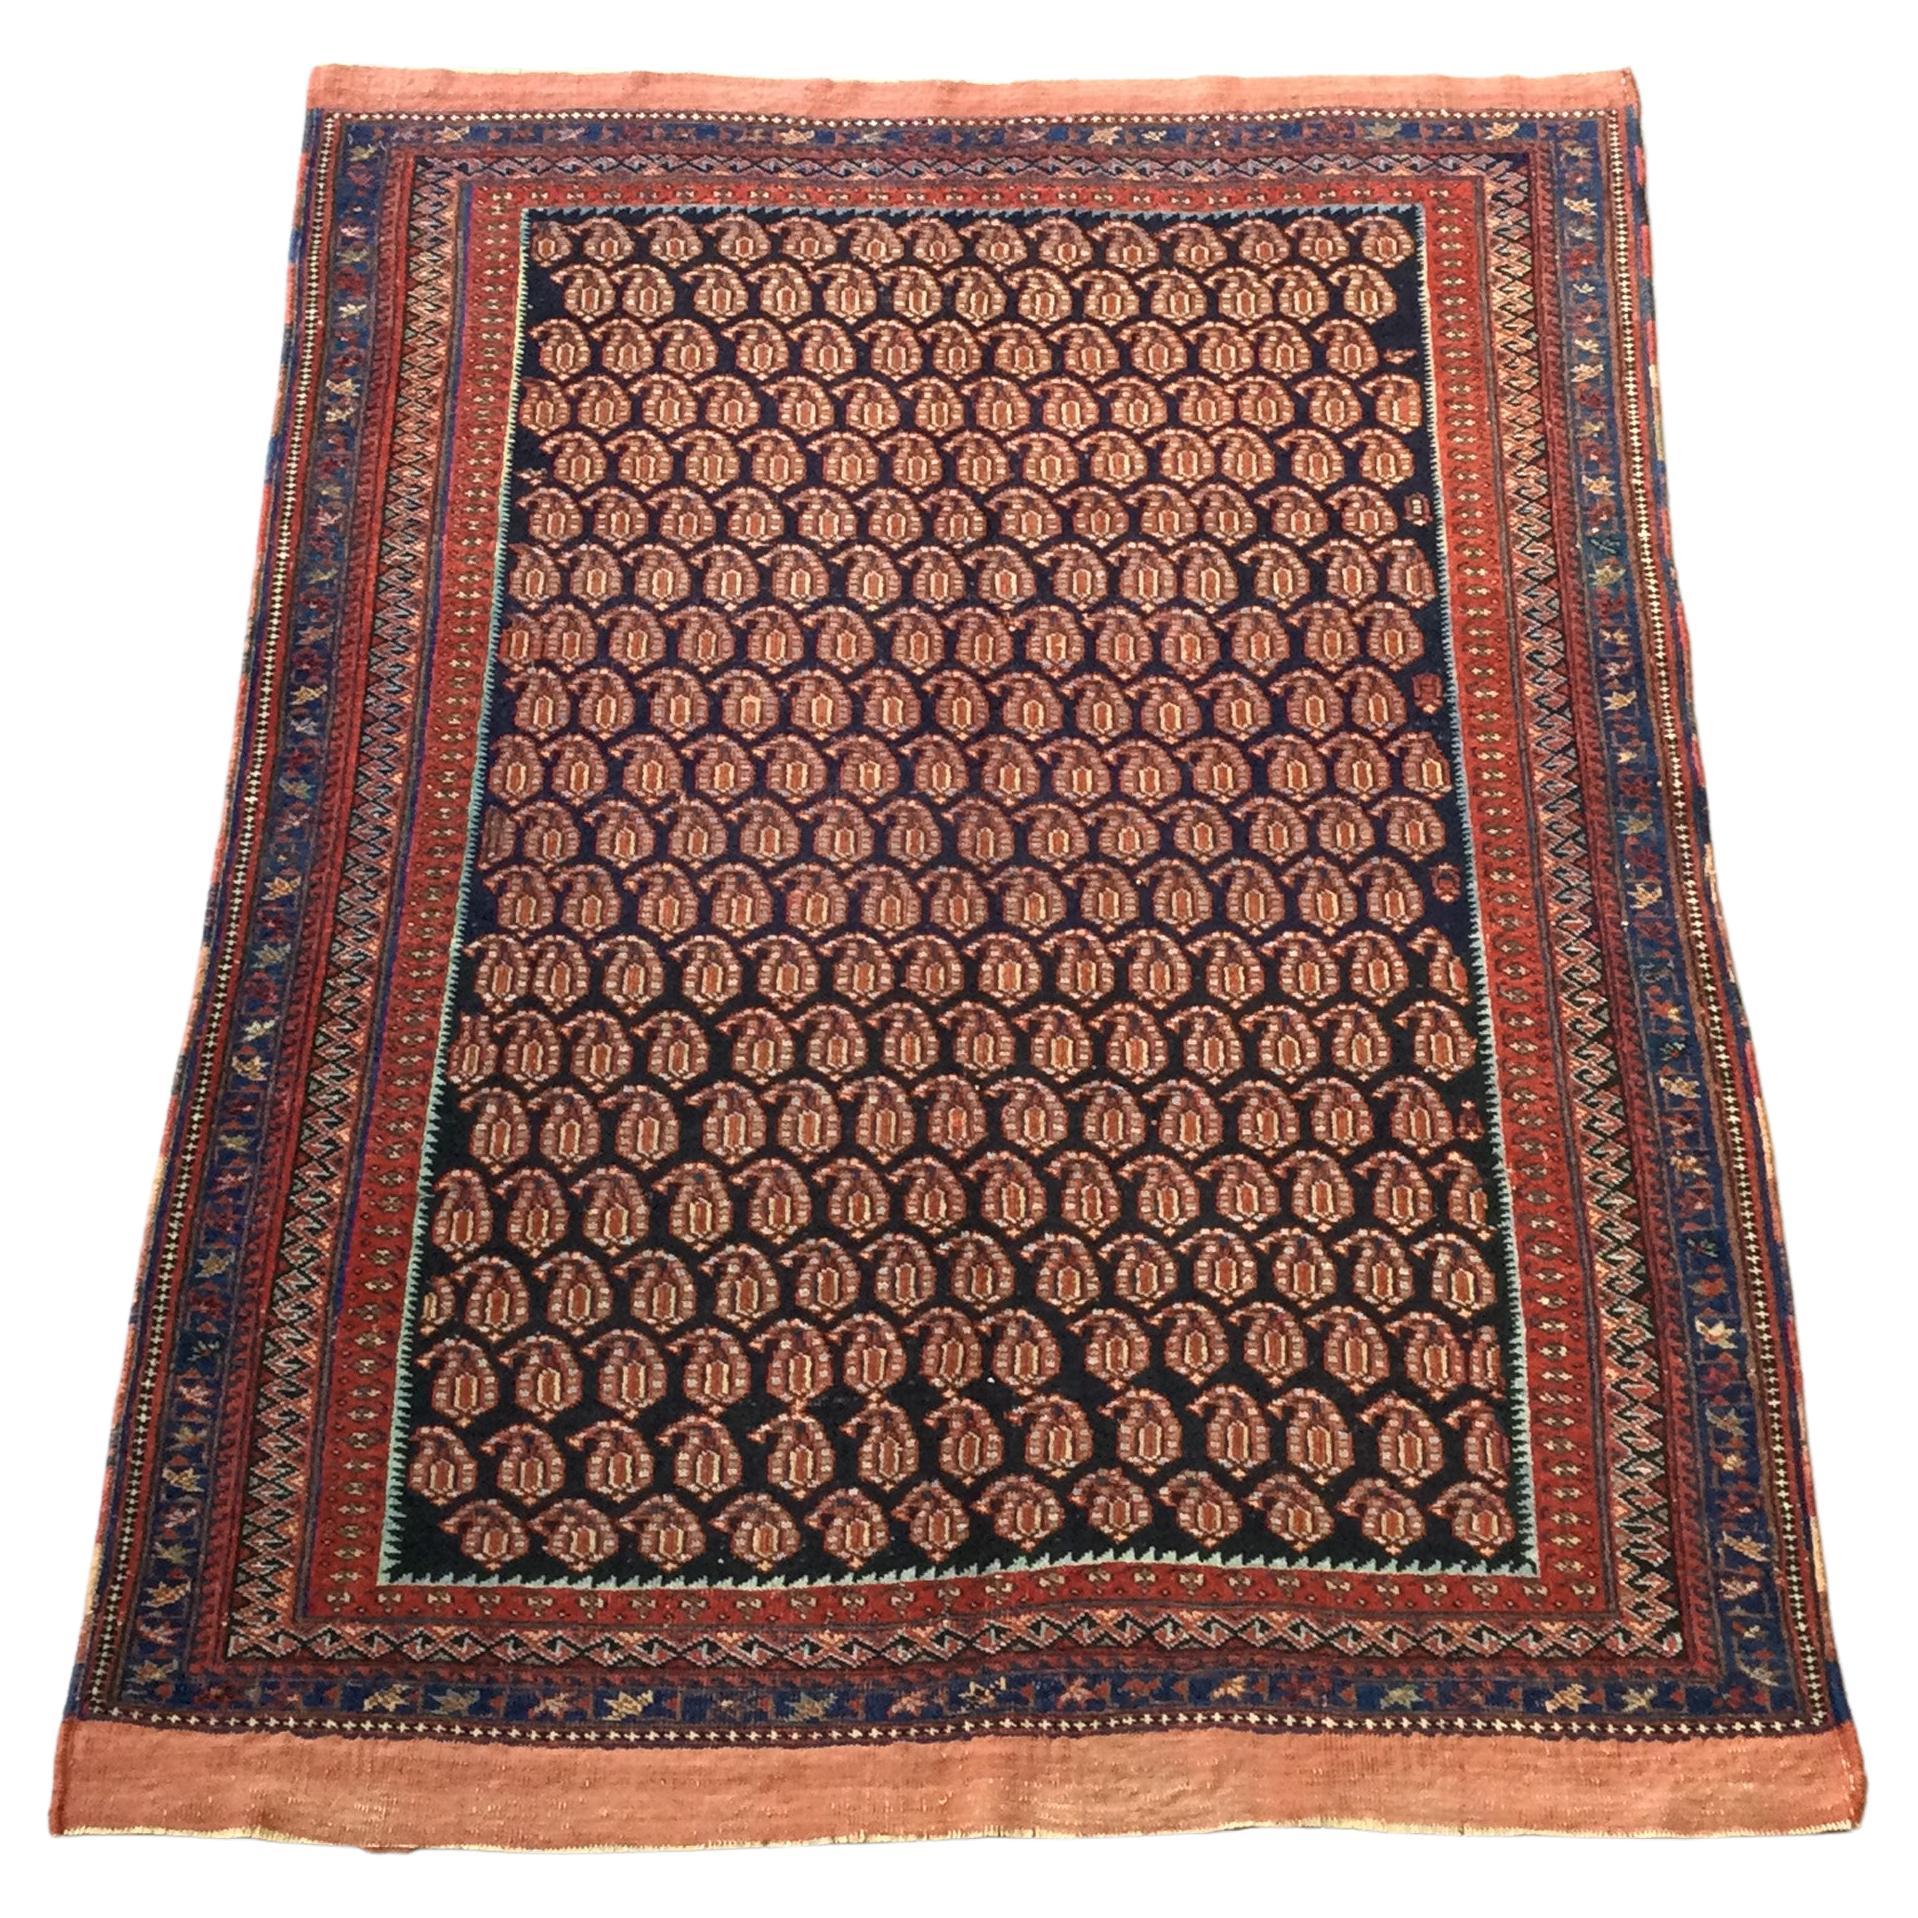 Classic Senneh. Bothe Design. Handmade Wool Rug. 1.65 x 1.25 m.